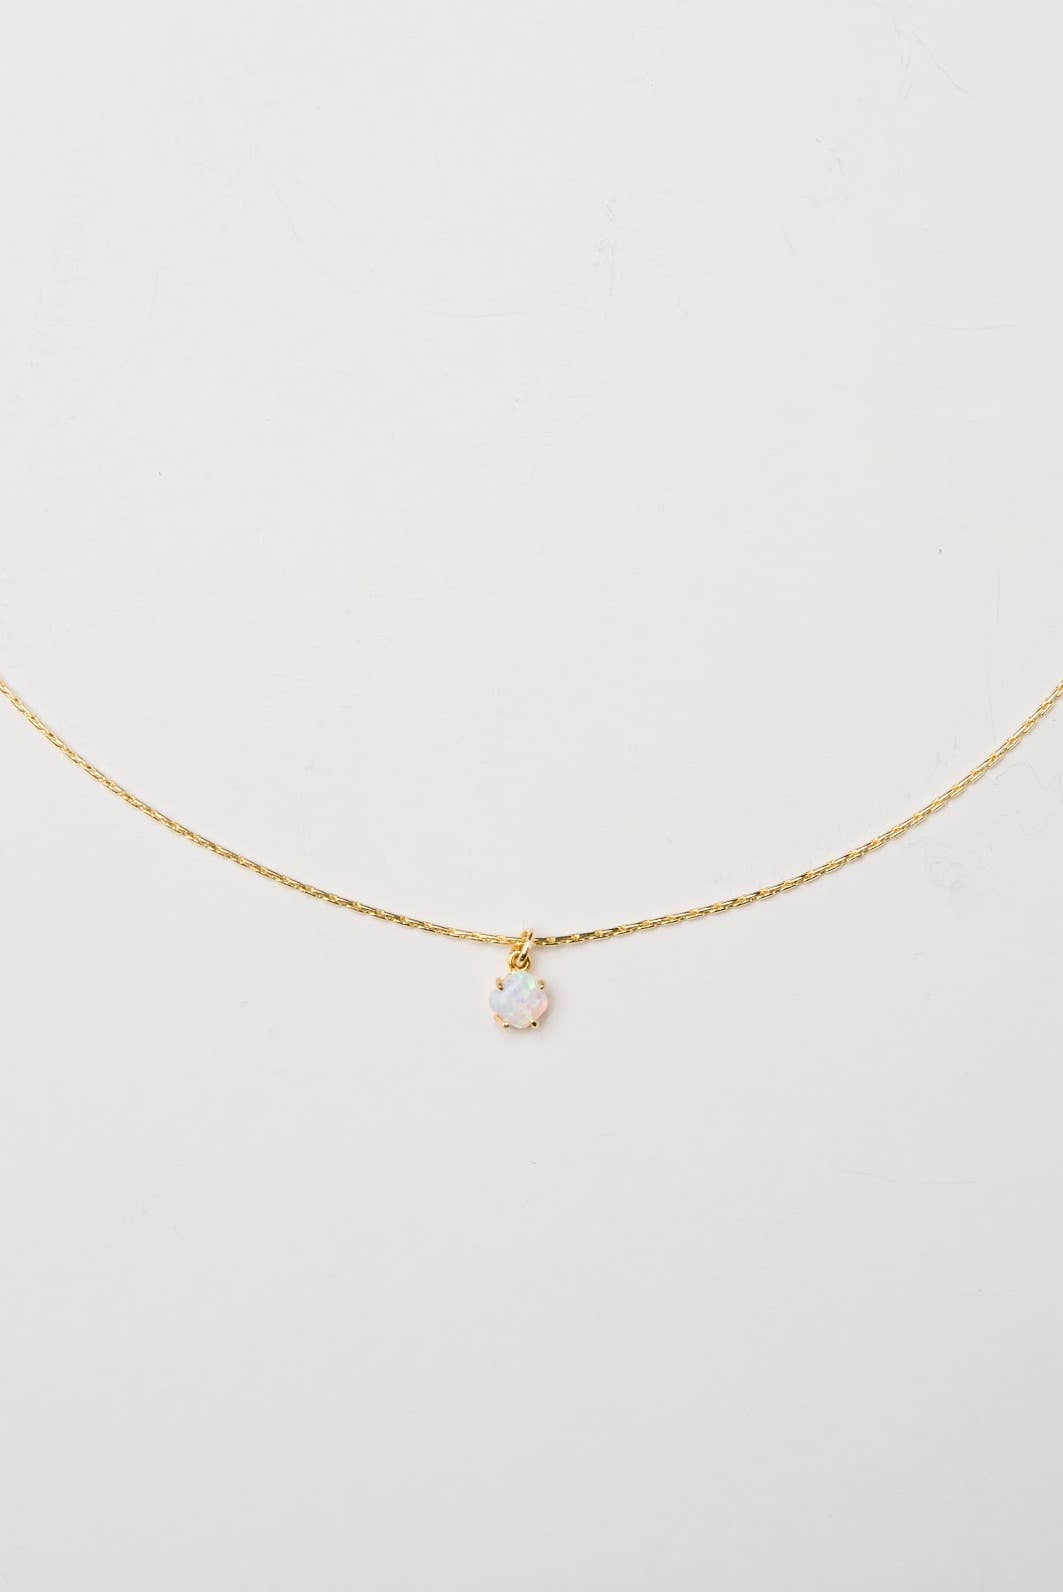 Brenda Grands Jewelry - Opal Necklace